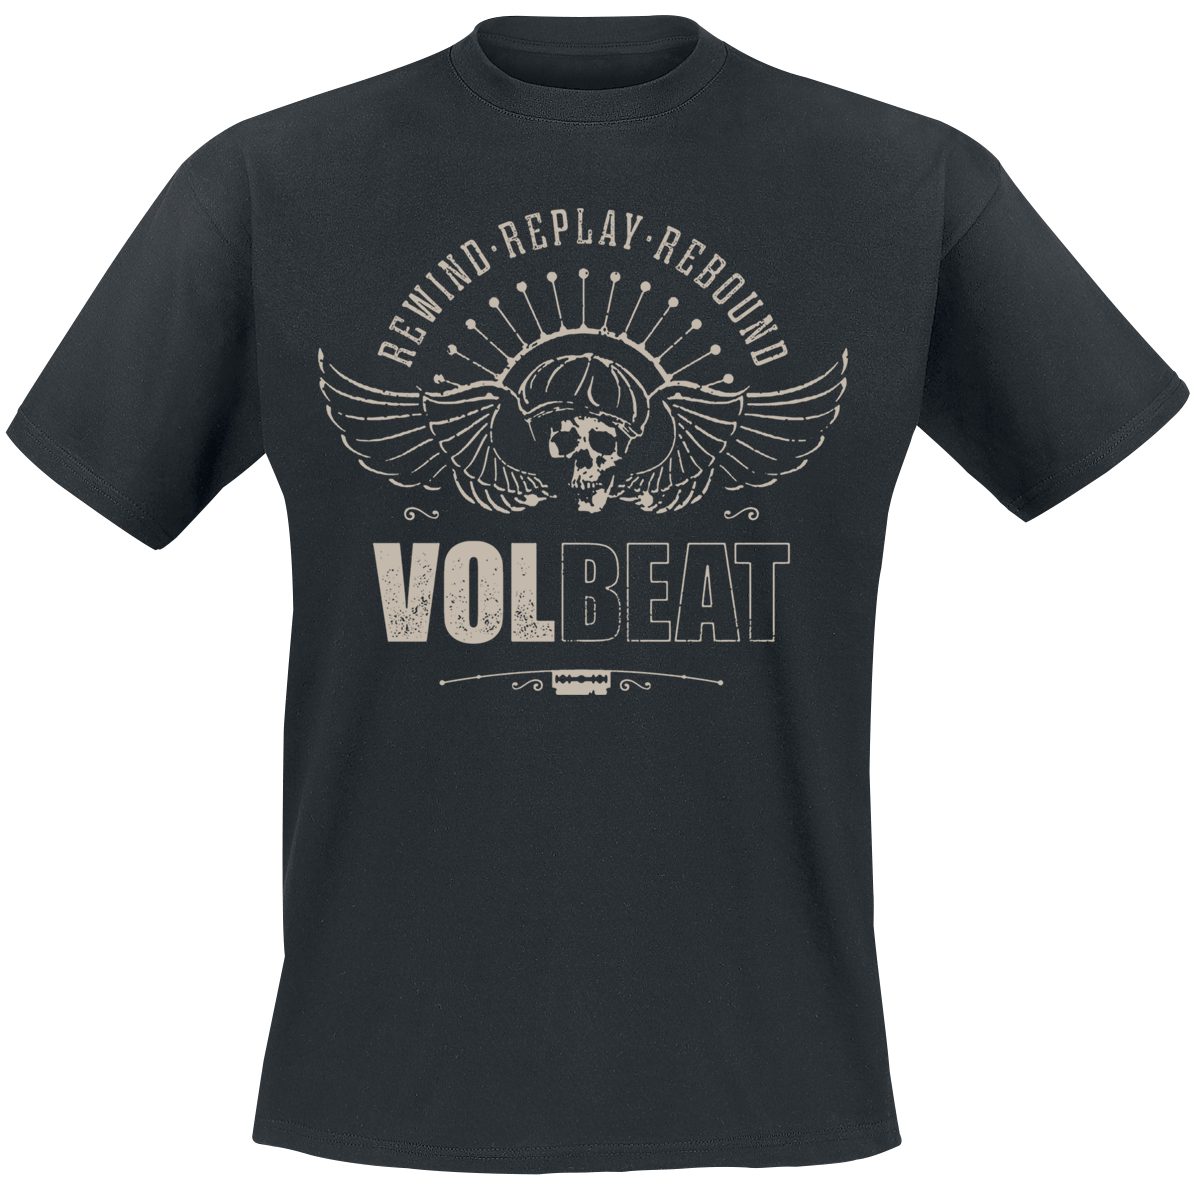 Volbeat - Skullwing - Rewind, Replay, Rebound - T-Shirt - black image